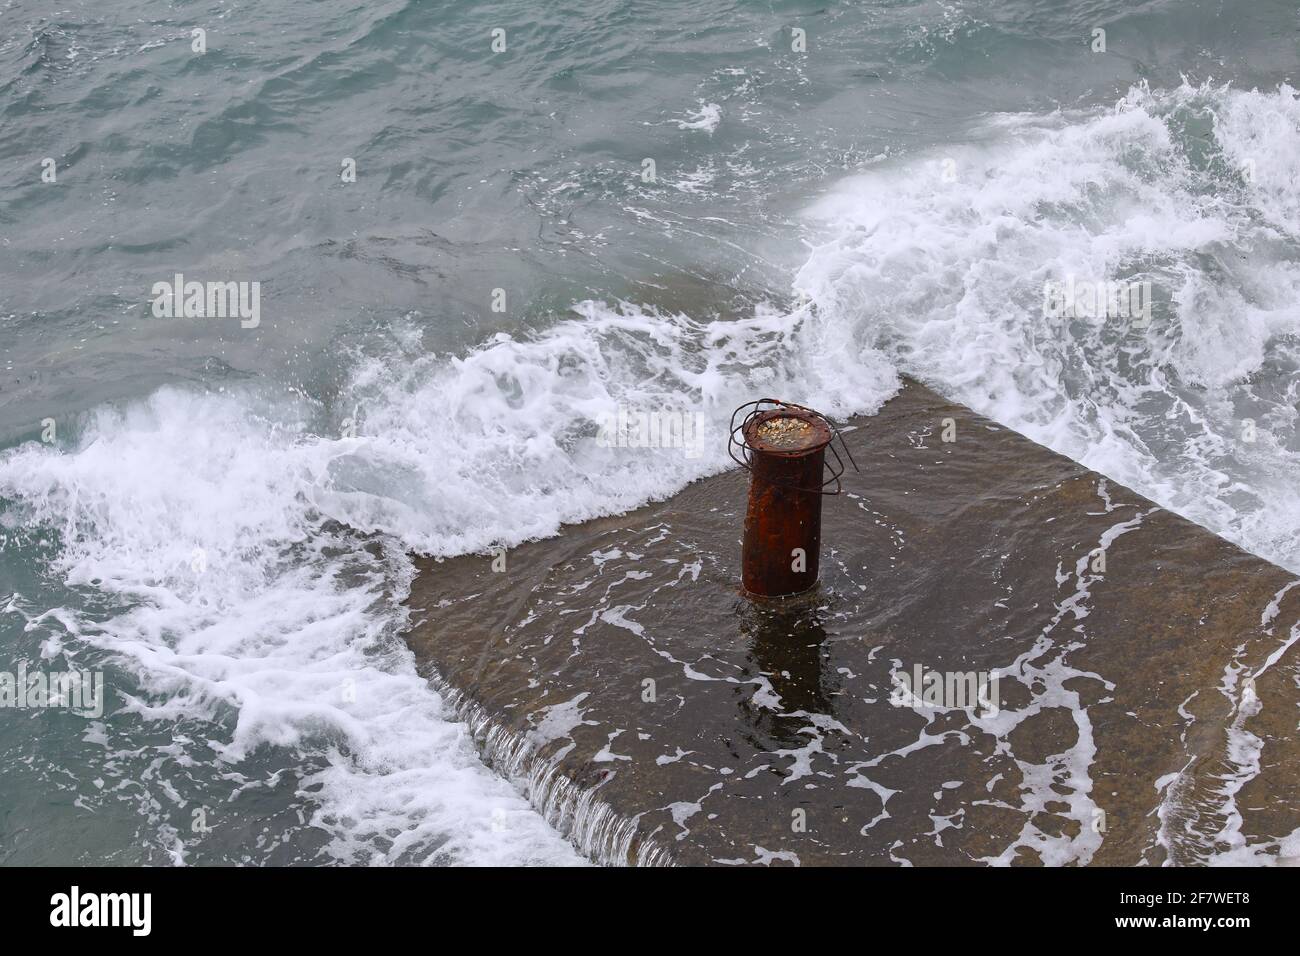 Dock Cleat On A Cement Platform.  Copy Space. Sea waves crashing platform. Stock Image Stock Photo